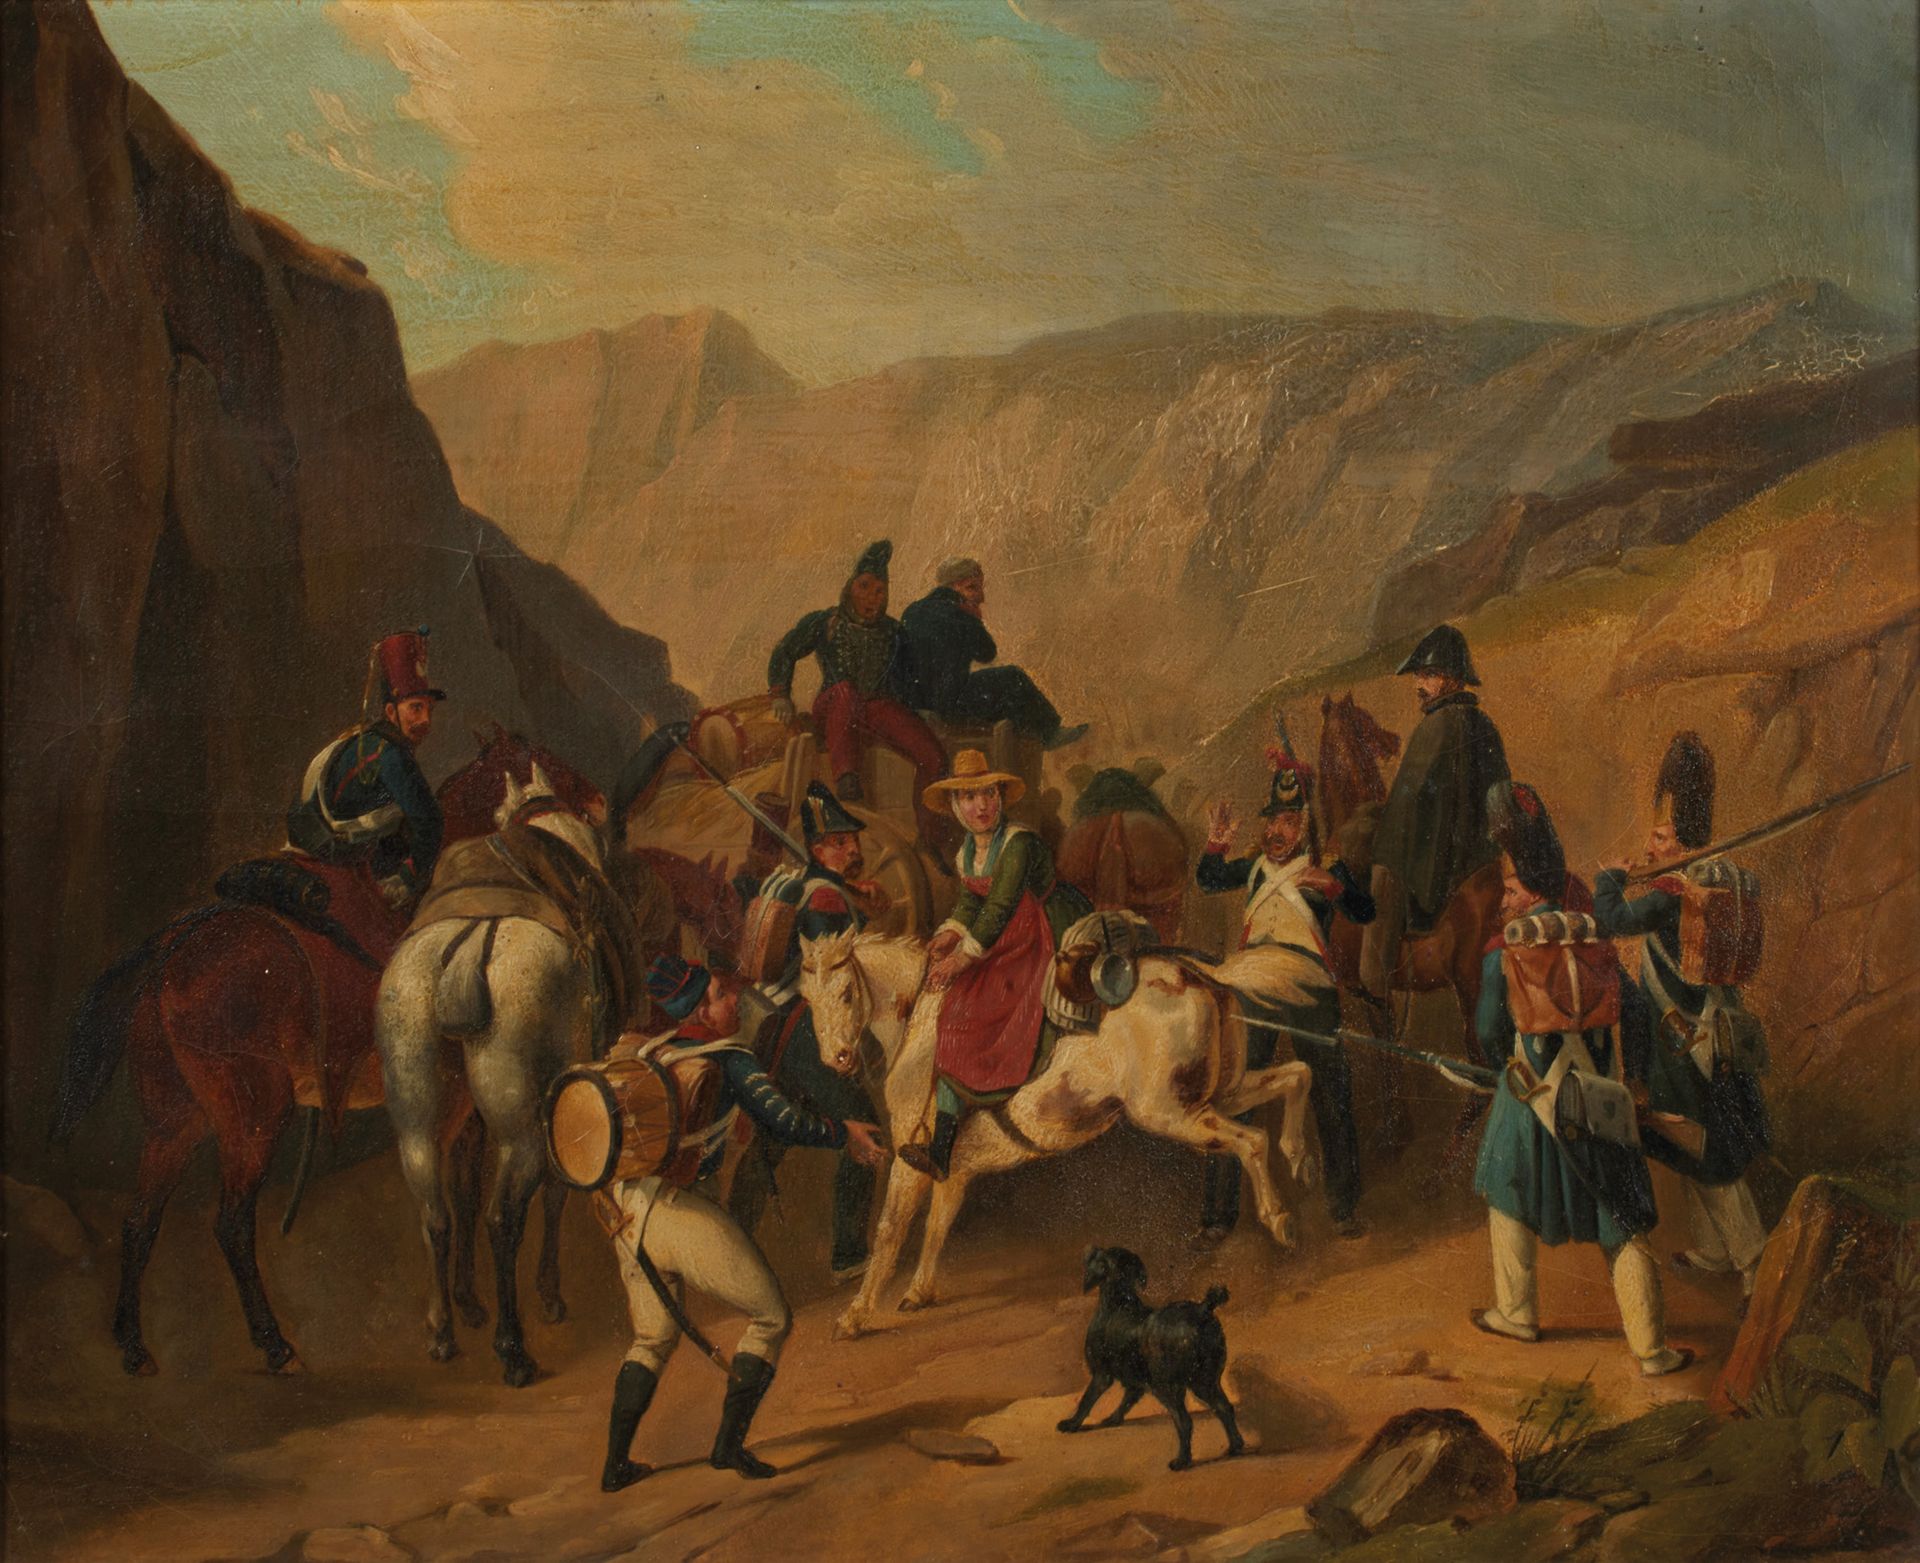 Ecole française du XIXème siècle 19世纪的法国学校
一群士兵和一个骑着不听话的马的女仆
布面油画
38 x 46厘米